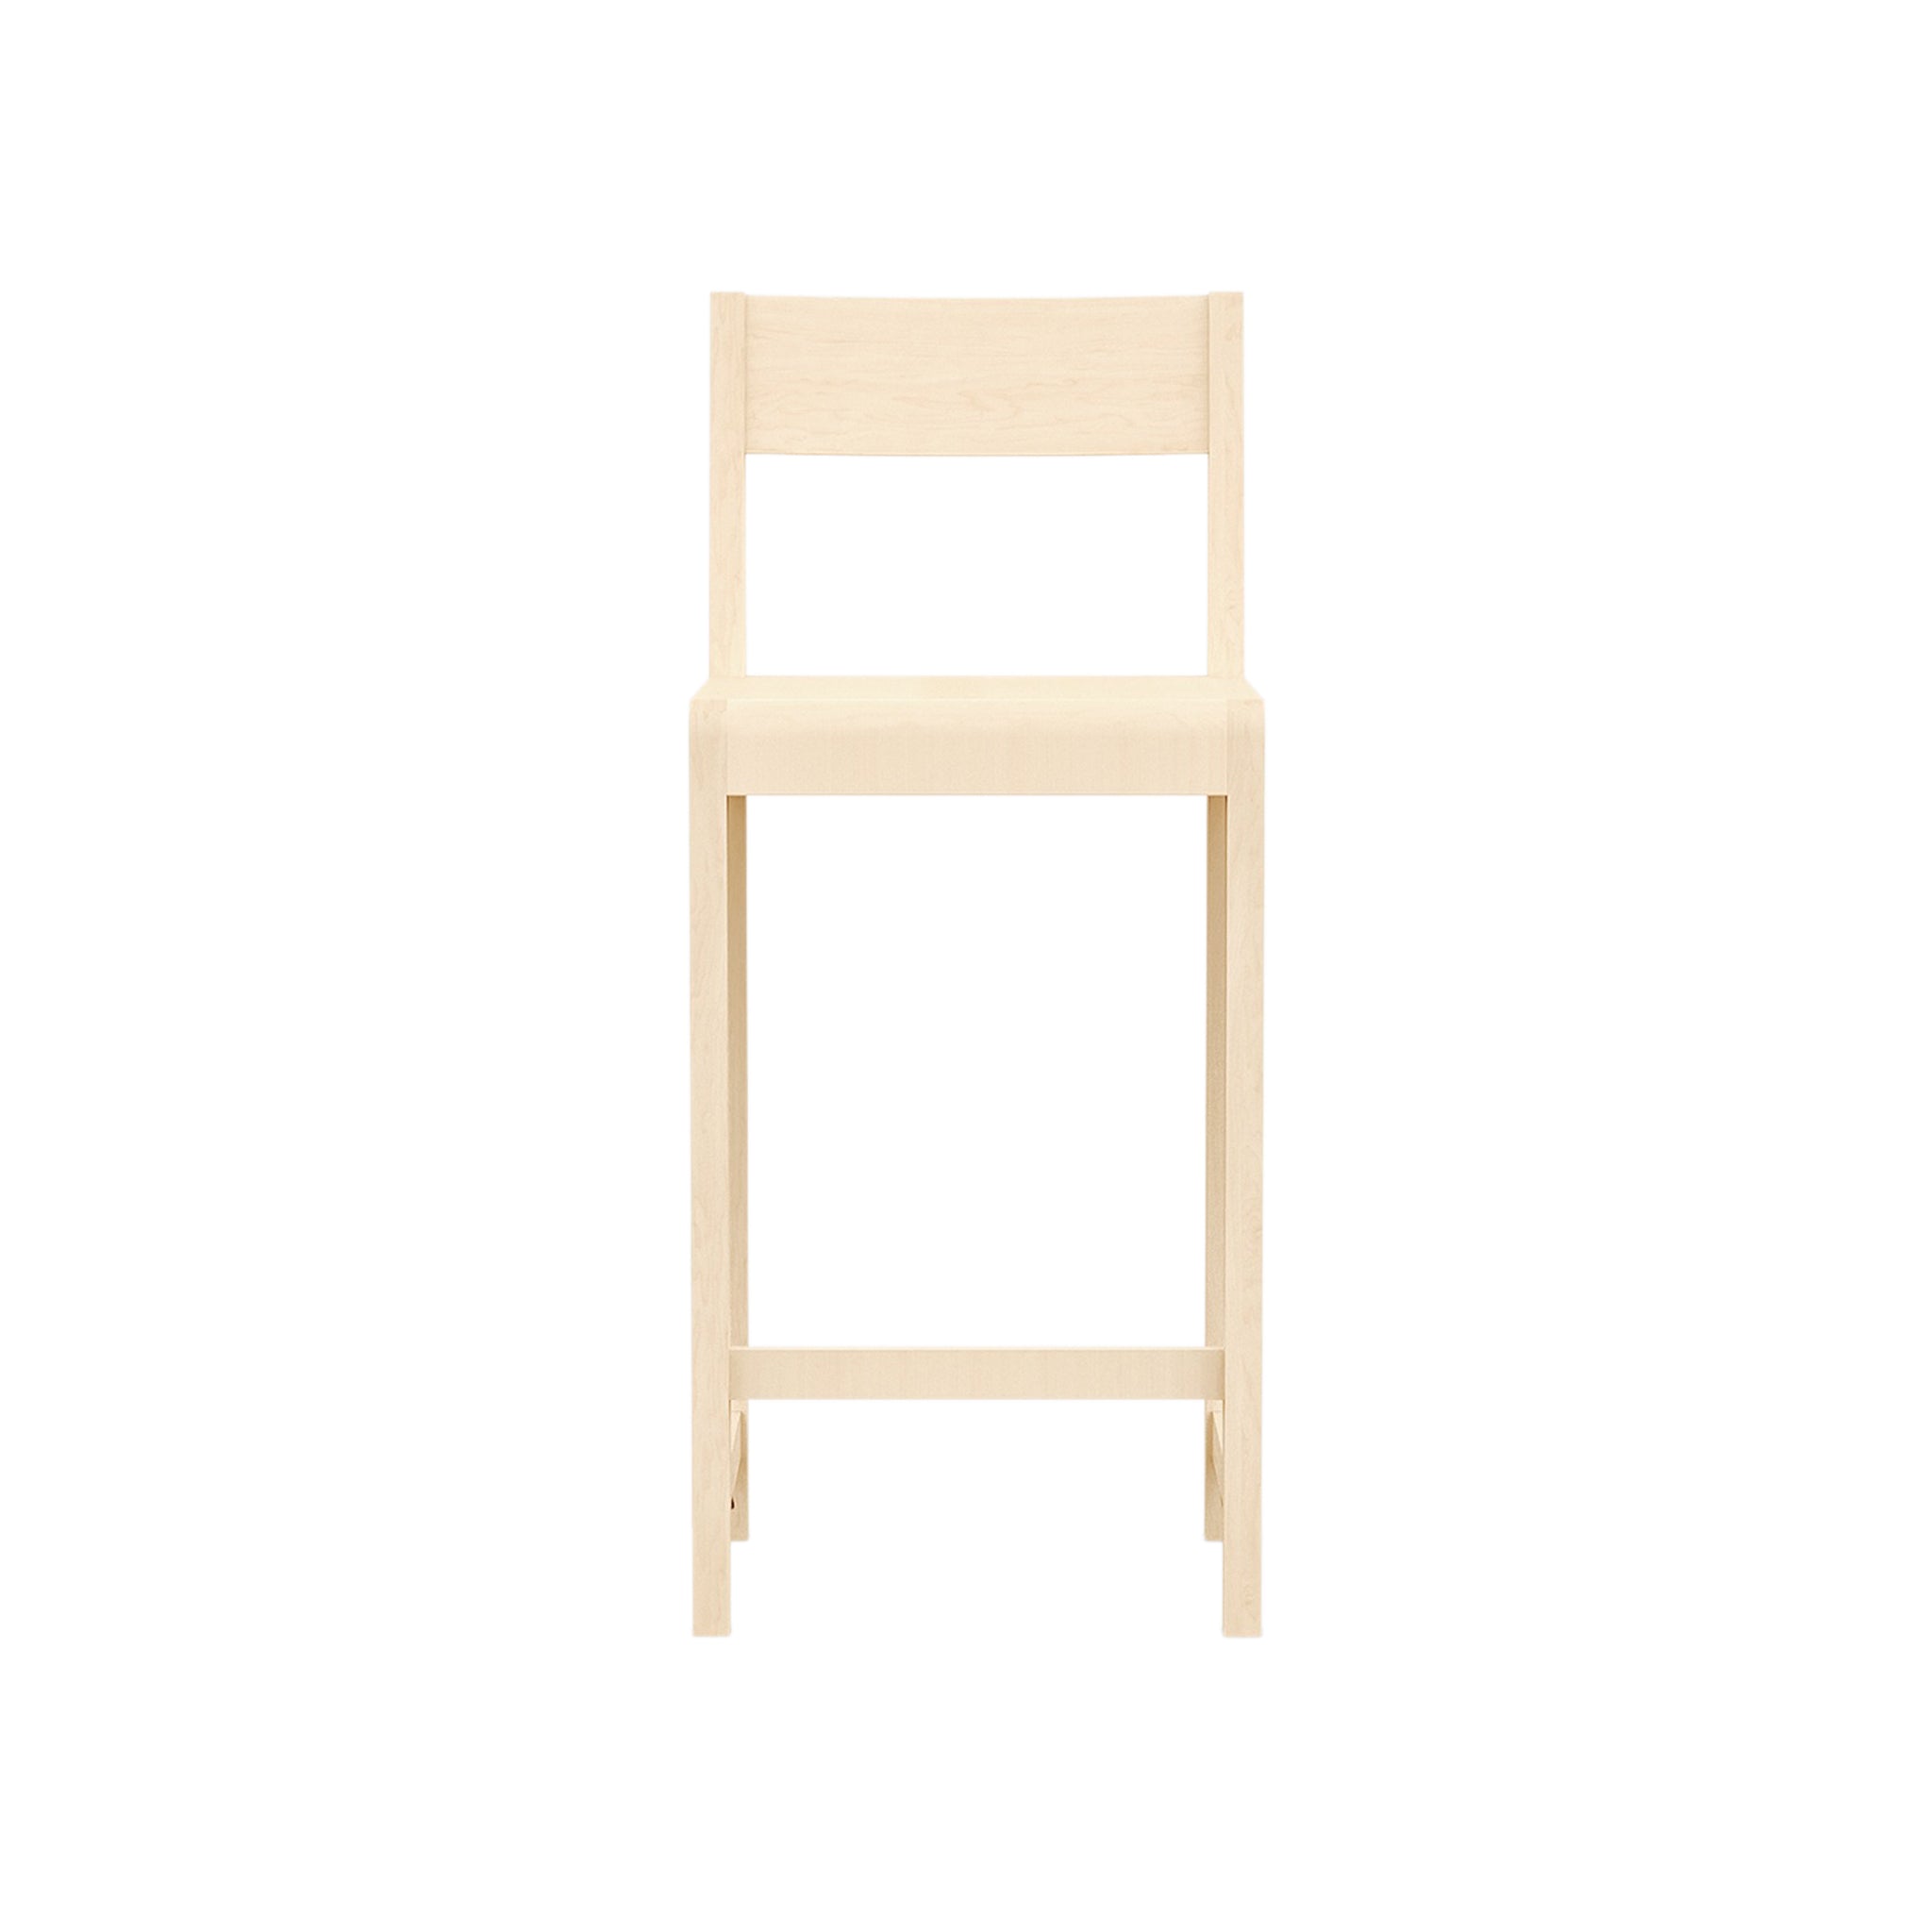 01 Bar + Counter Chair: Counter + Natural Birch